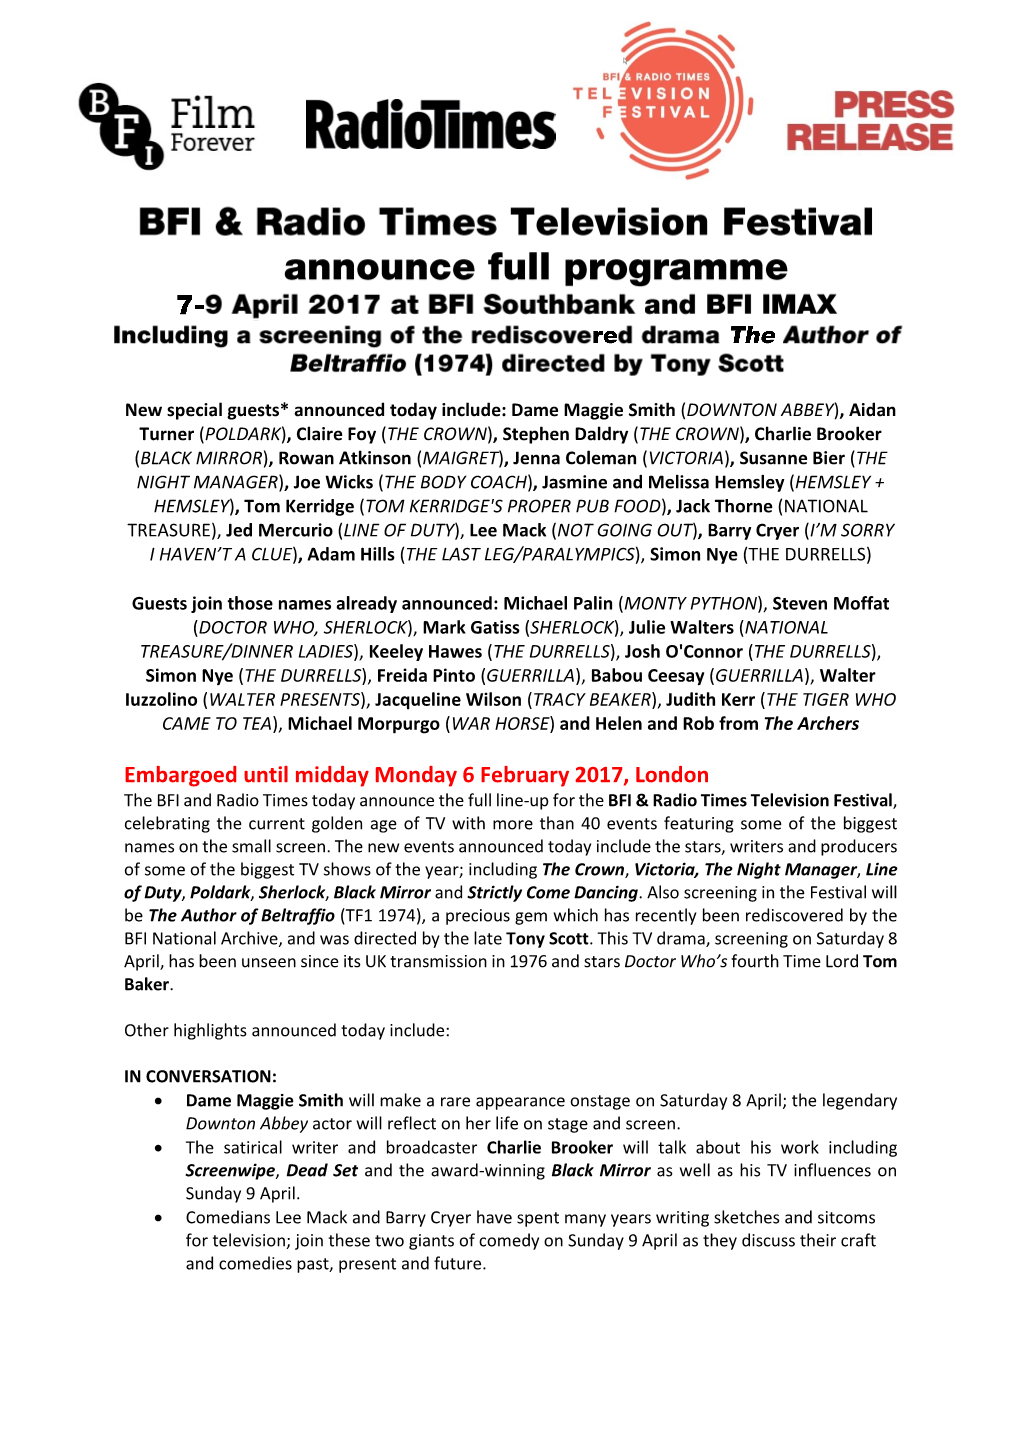 BFI & Radio Times Television Festival Announce Full Programme